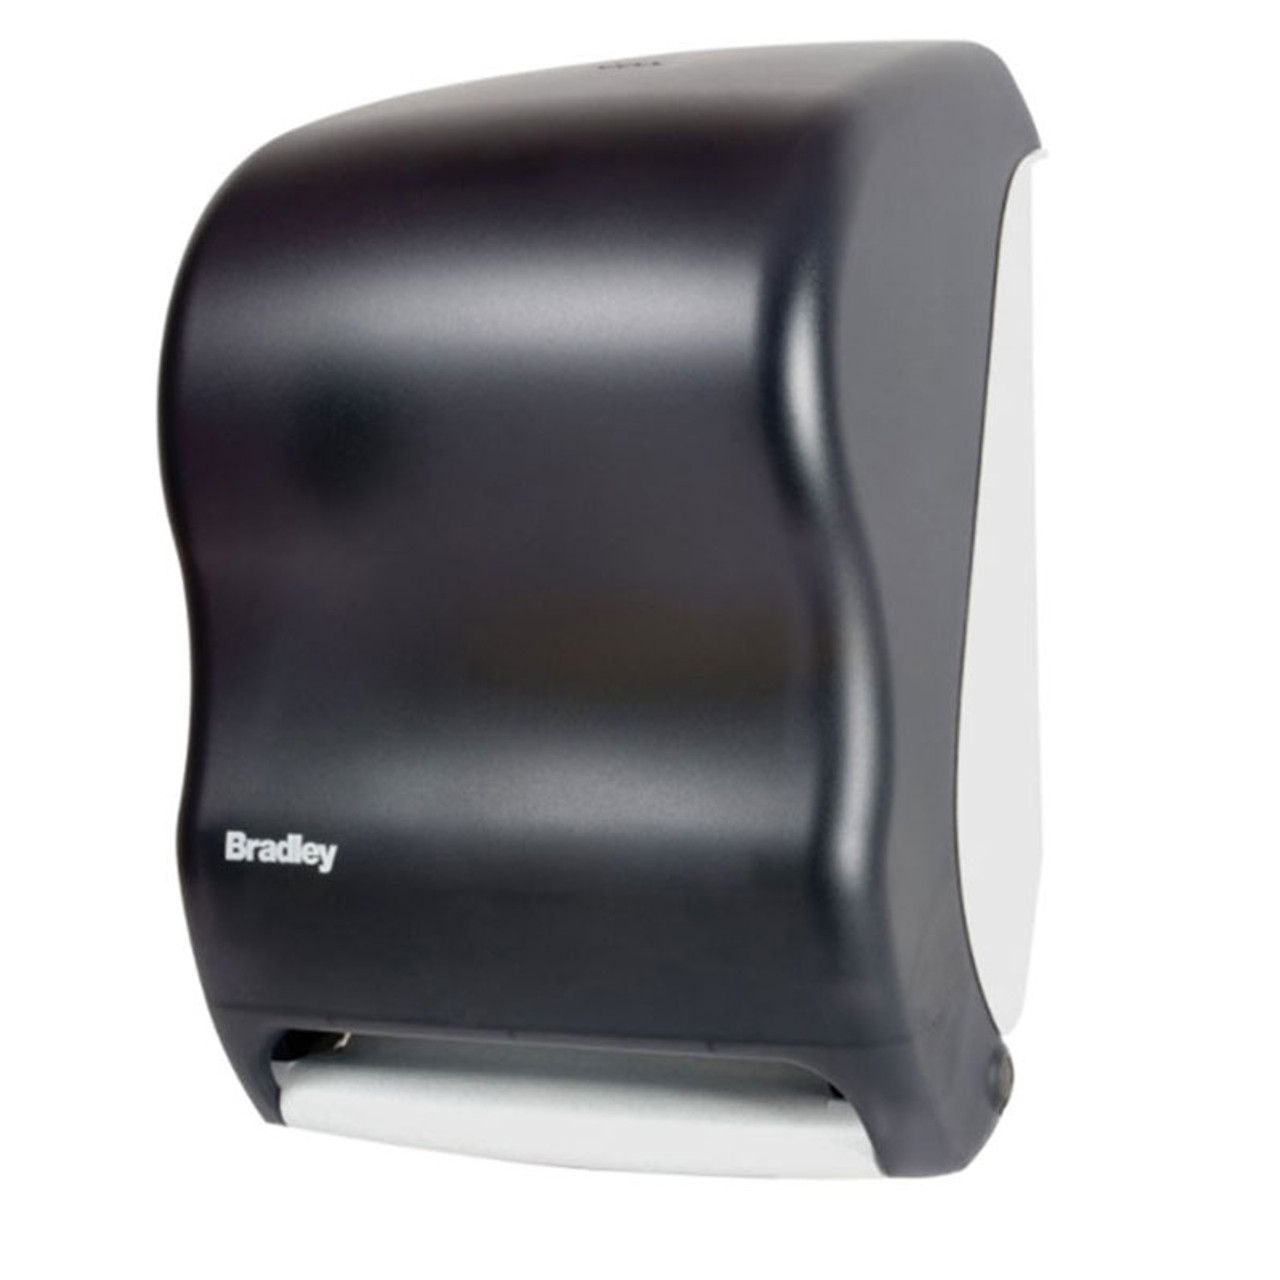 Bradley Corporation Sensored Paper Towel Dispenser